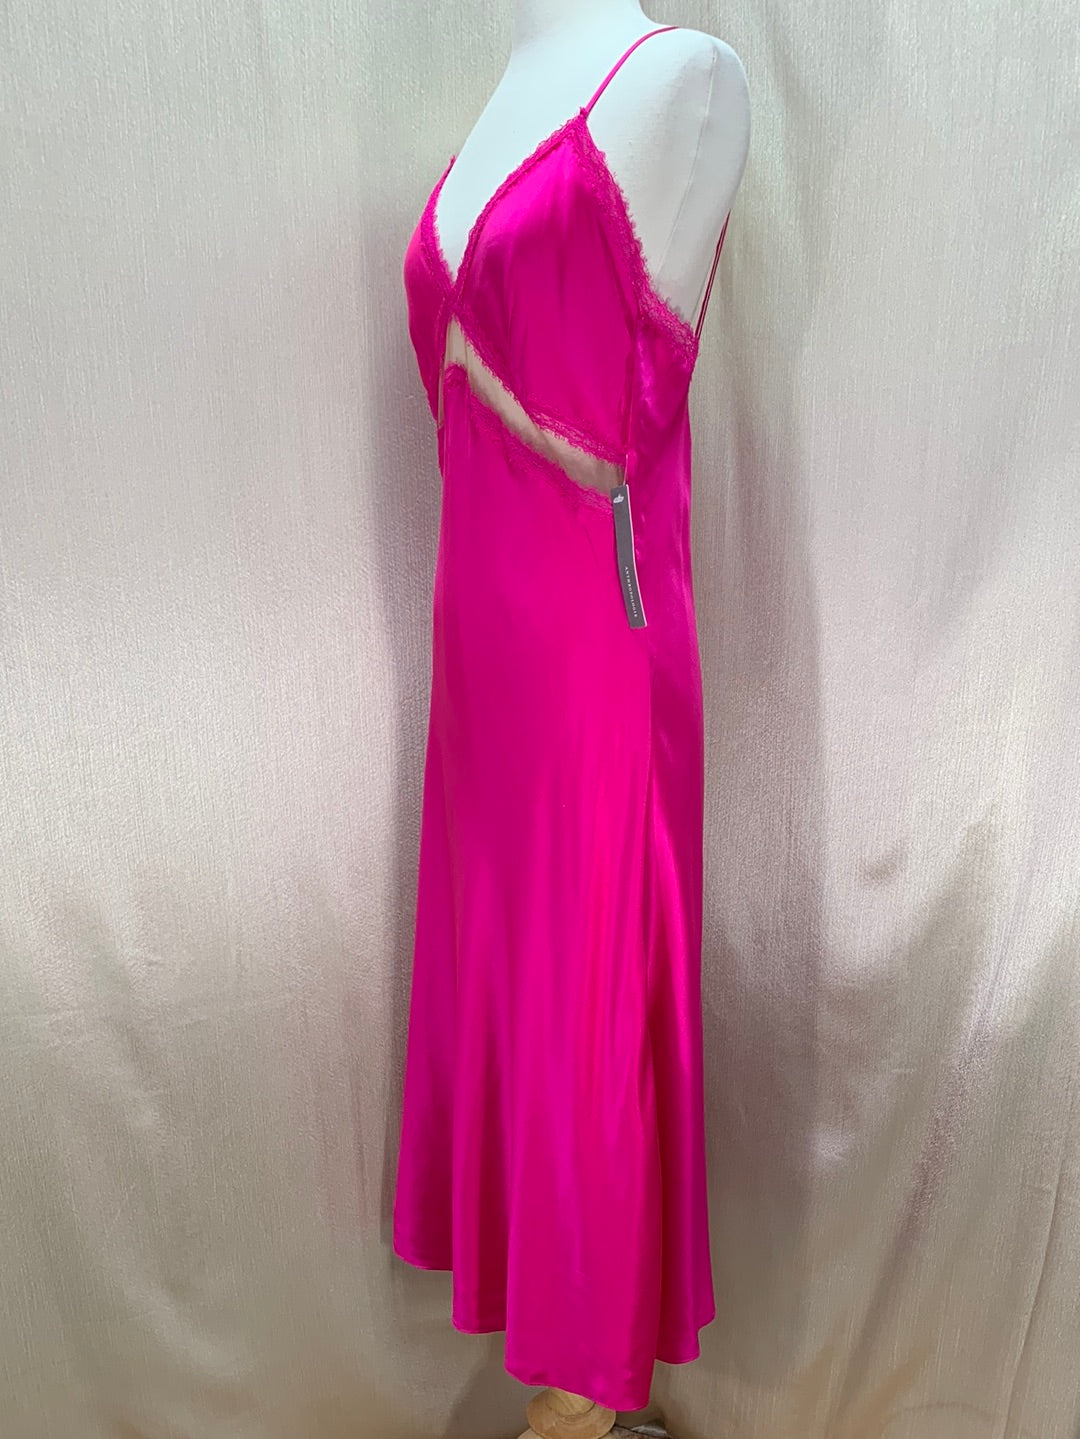 NWT - CAMI NYC ANTHROPOLOGIE neon pink Silk Delfina Slip Dress - L